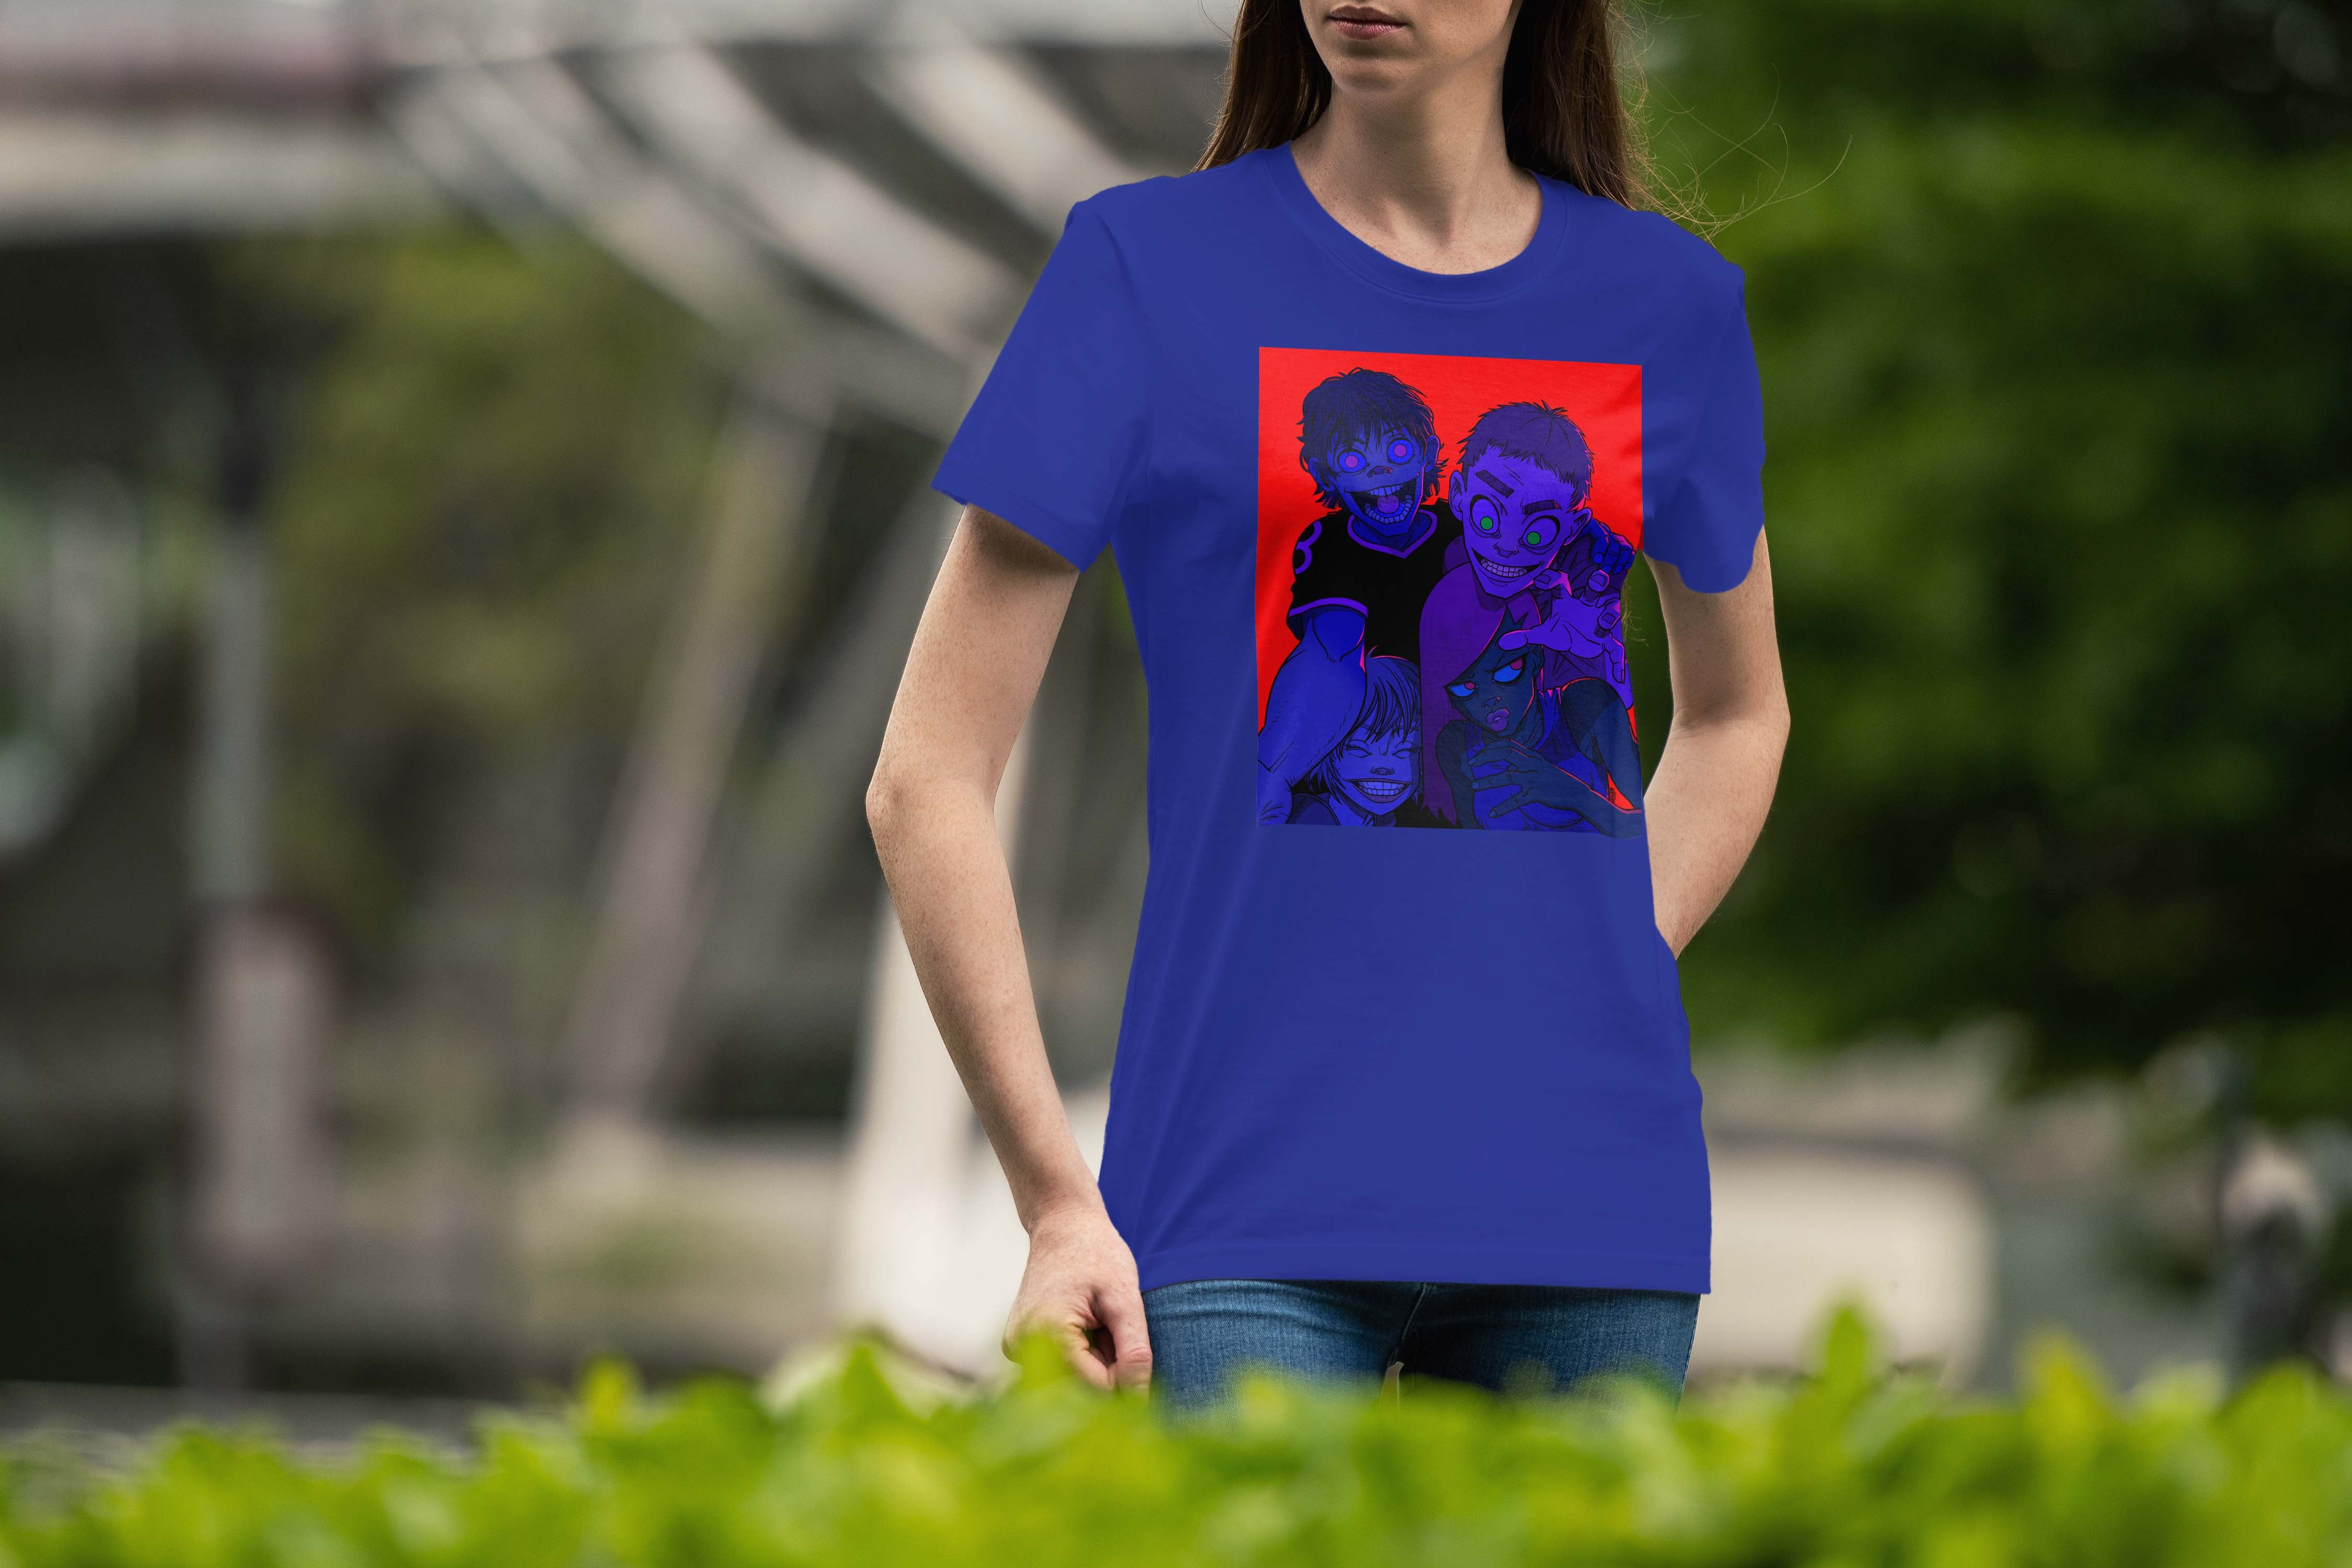 Unique and cool Gorillaz-style T-Shirt illustration